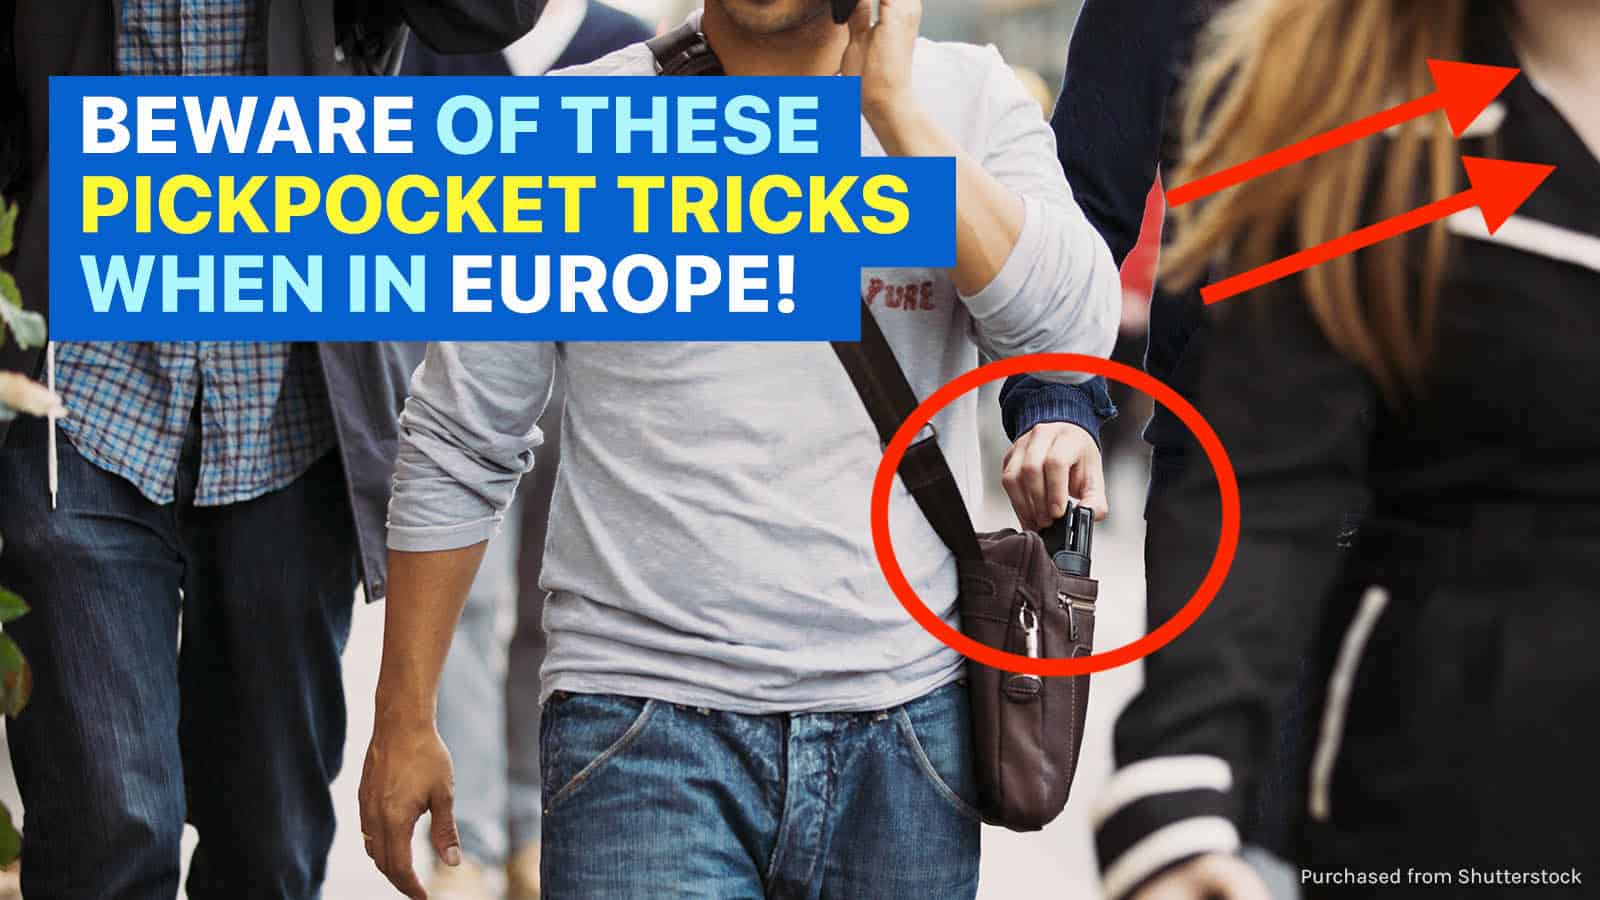 https://www.thepoortraveler.net/wp-content/uploads/2019/11/Pickpocket-Tricks-Europe.jpg